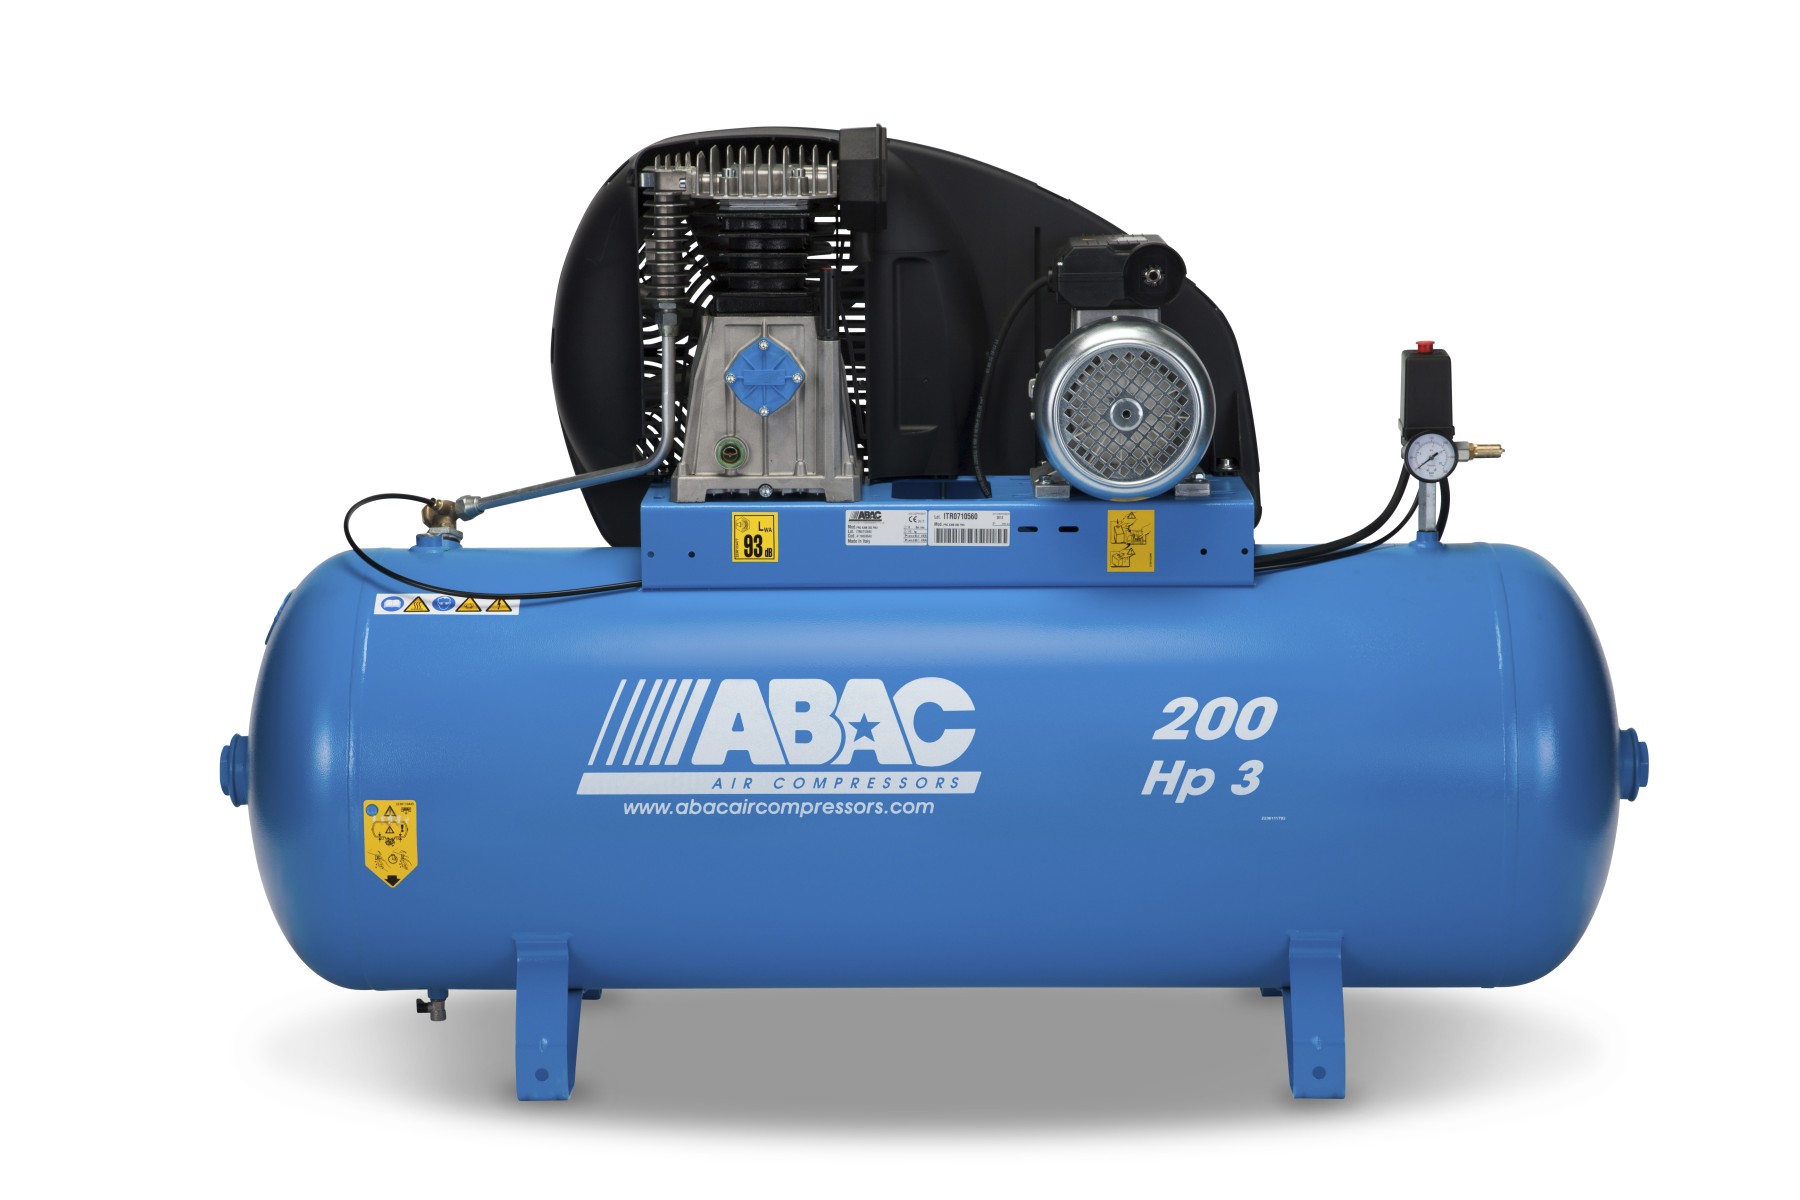 Compresor monofásico ABAC A29B-200 FM3